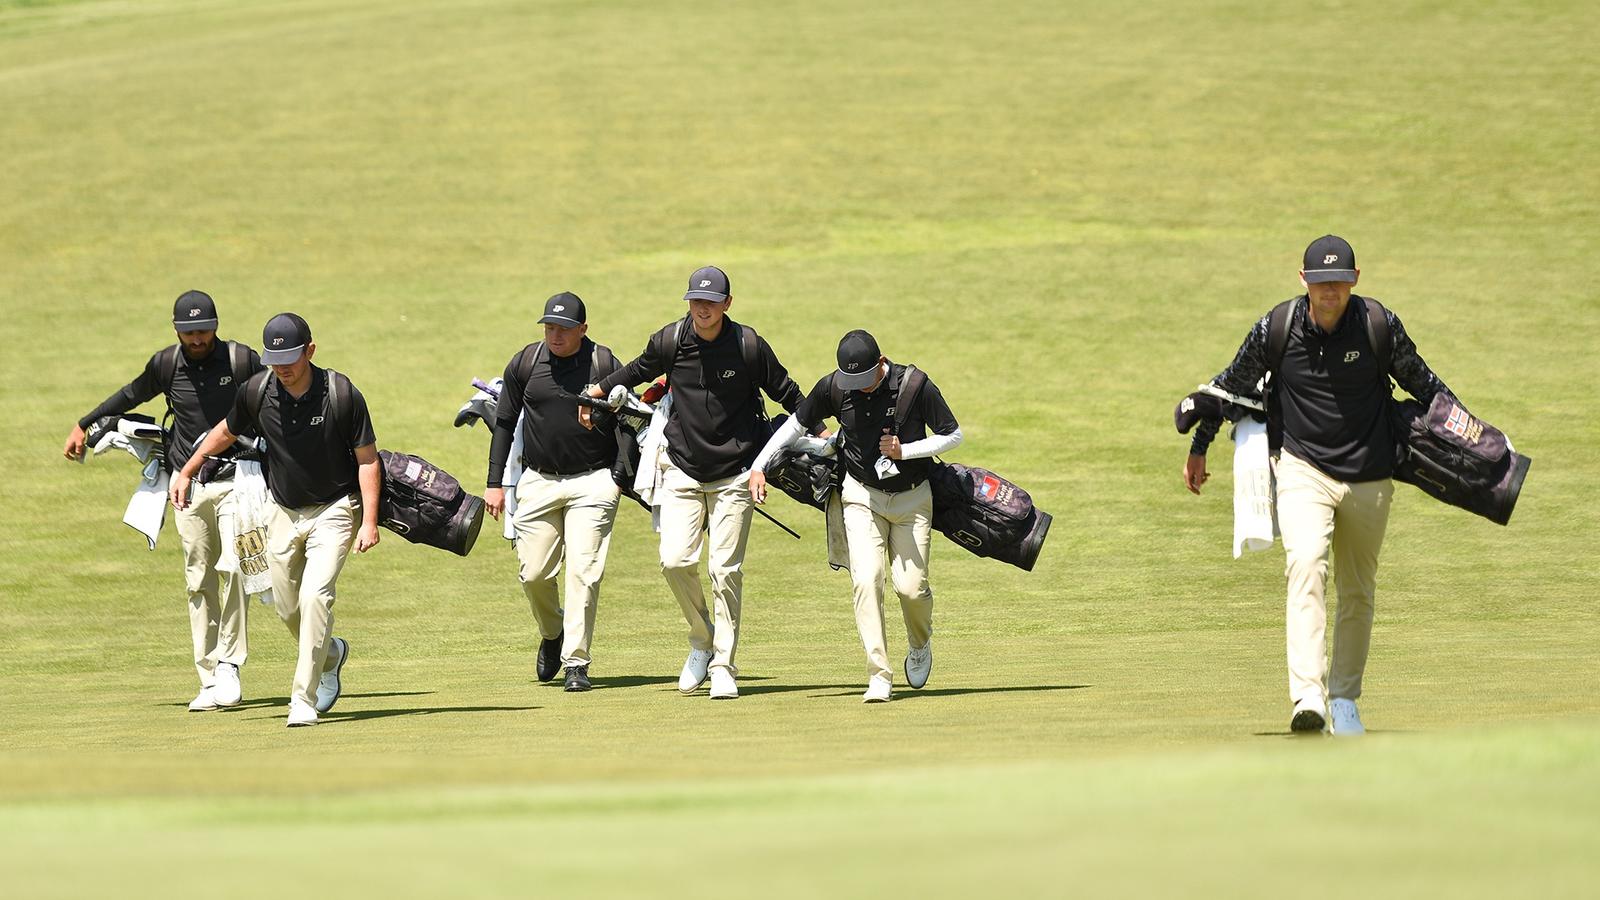 Purdue Men’s Golf Team Secures No. 5 Seed in NCAA Regionals, Set to Host at Kampen-Cosler Course